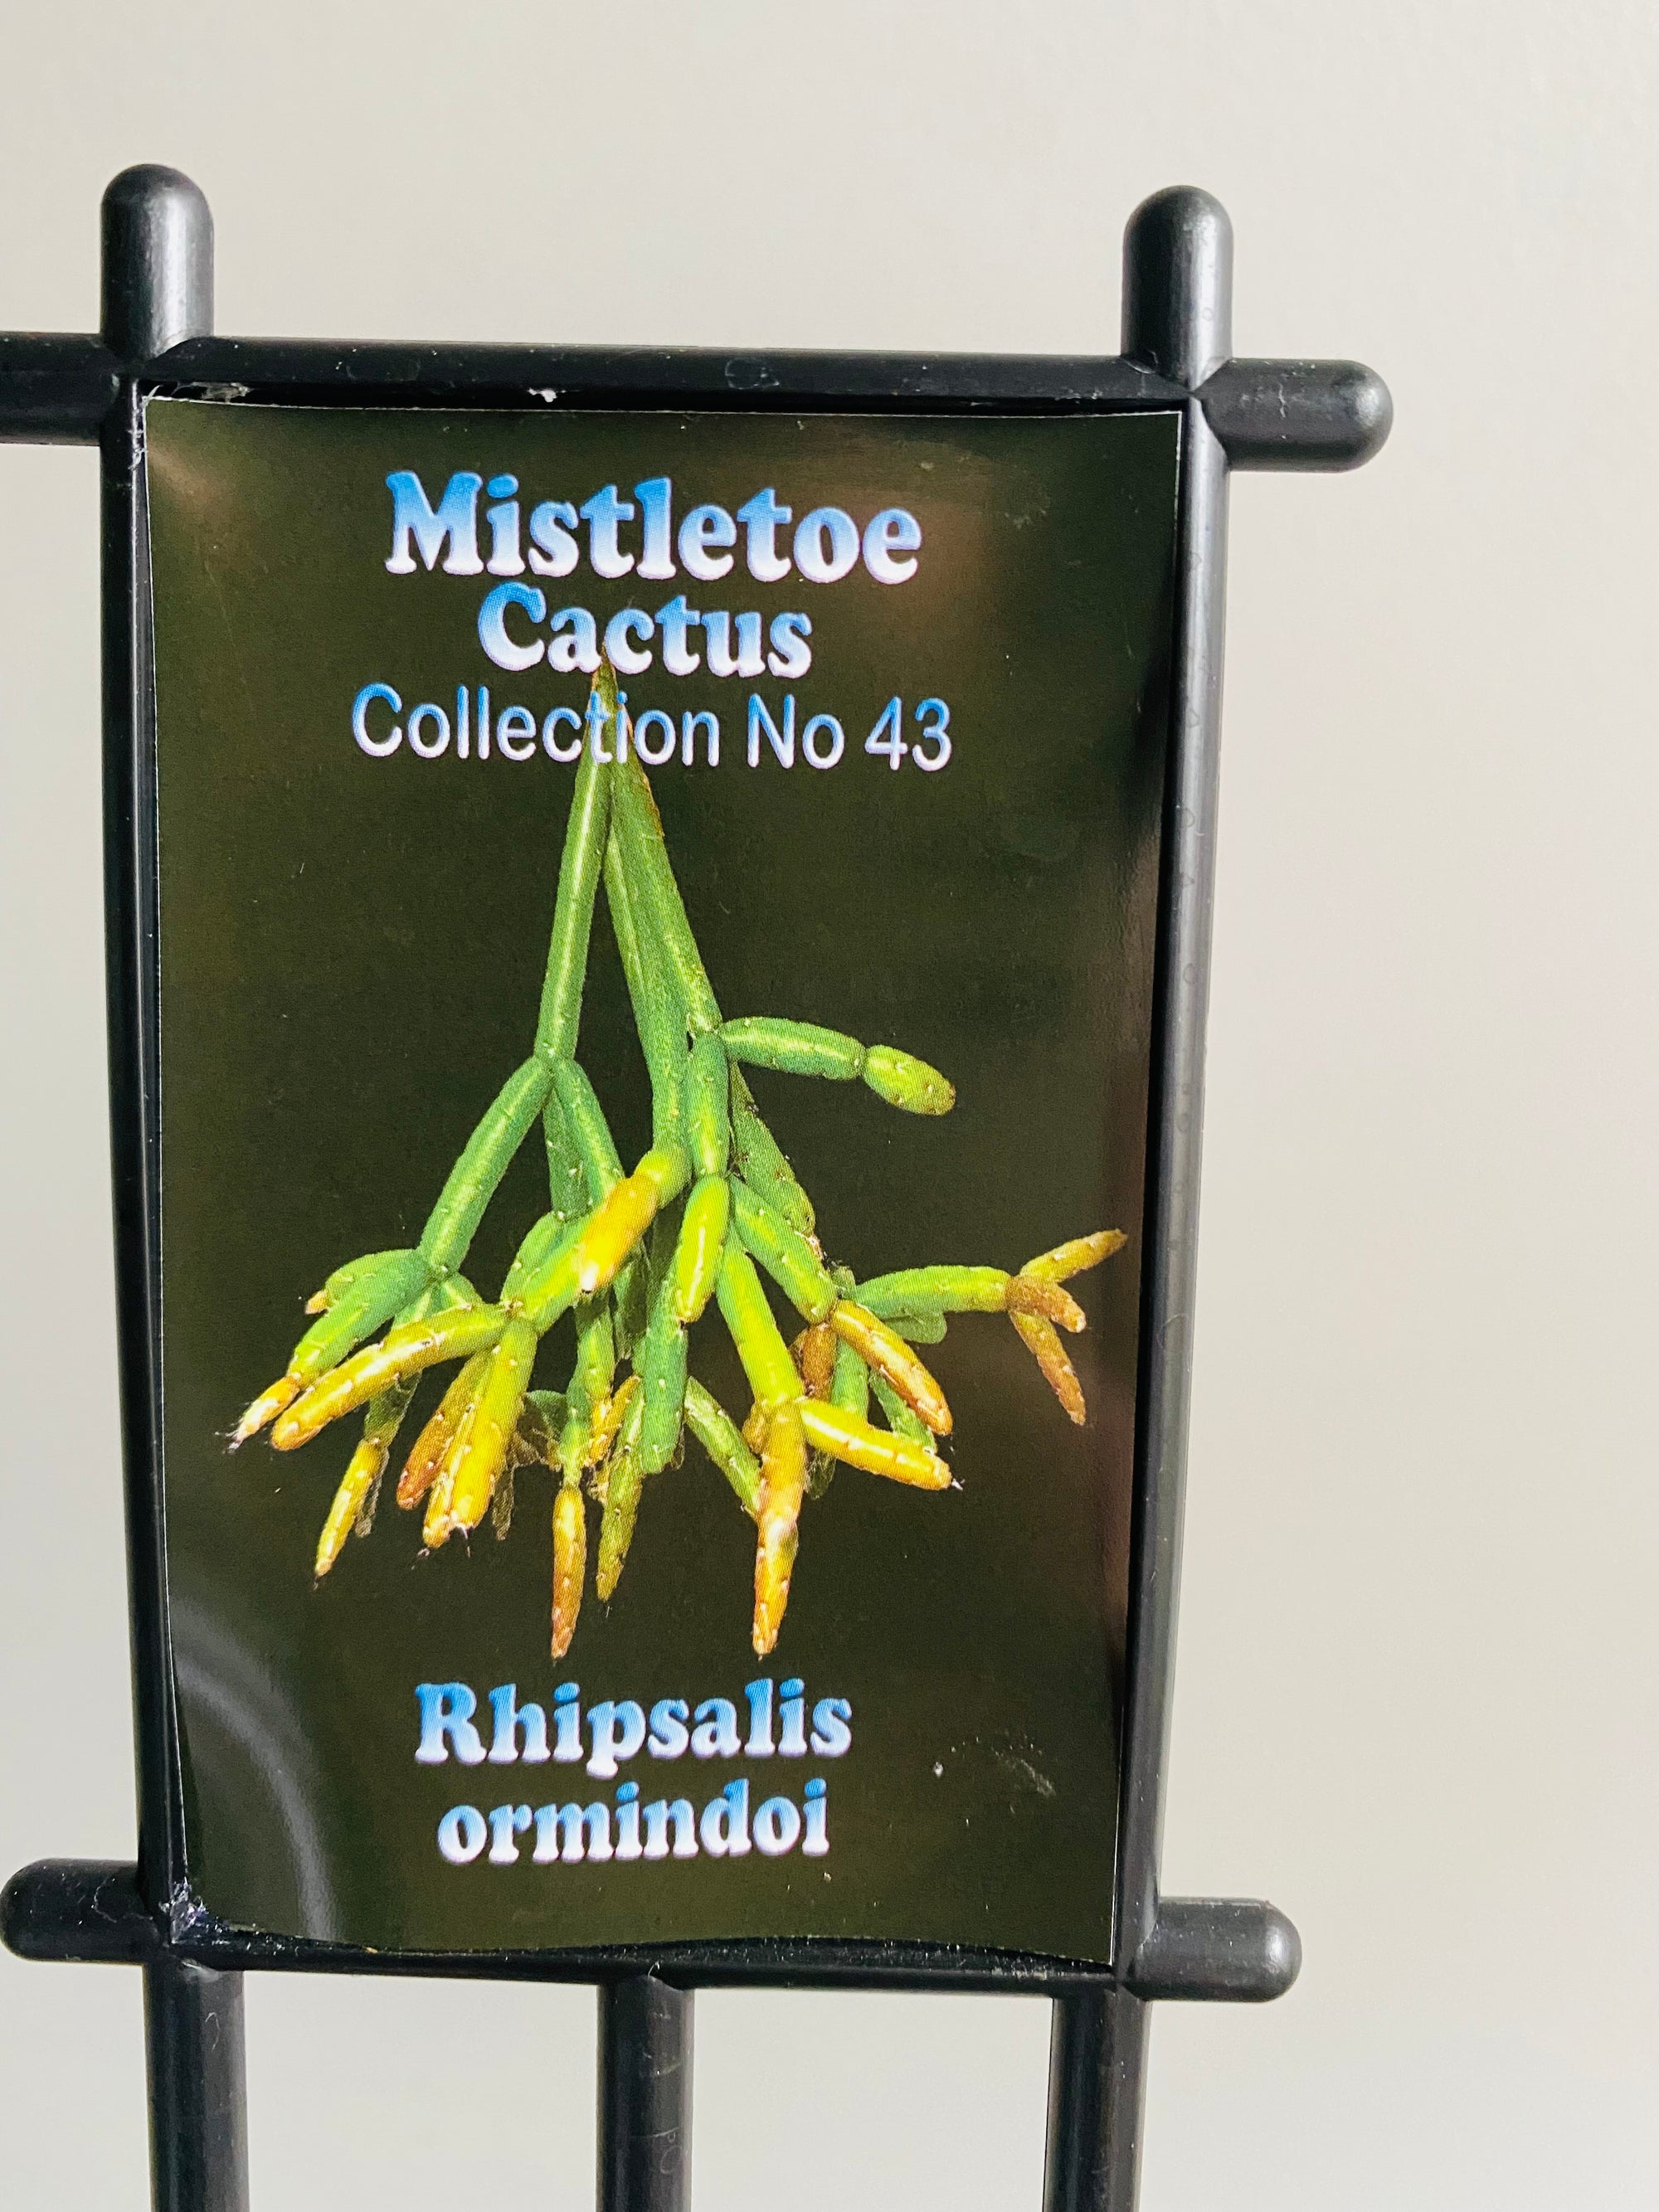 Rhipsalis Ormindoi - Mistletoe Cactus Collection No. 43